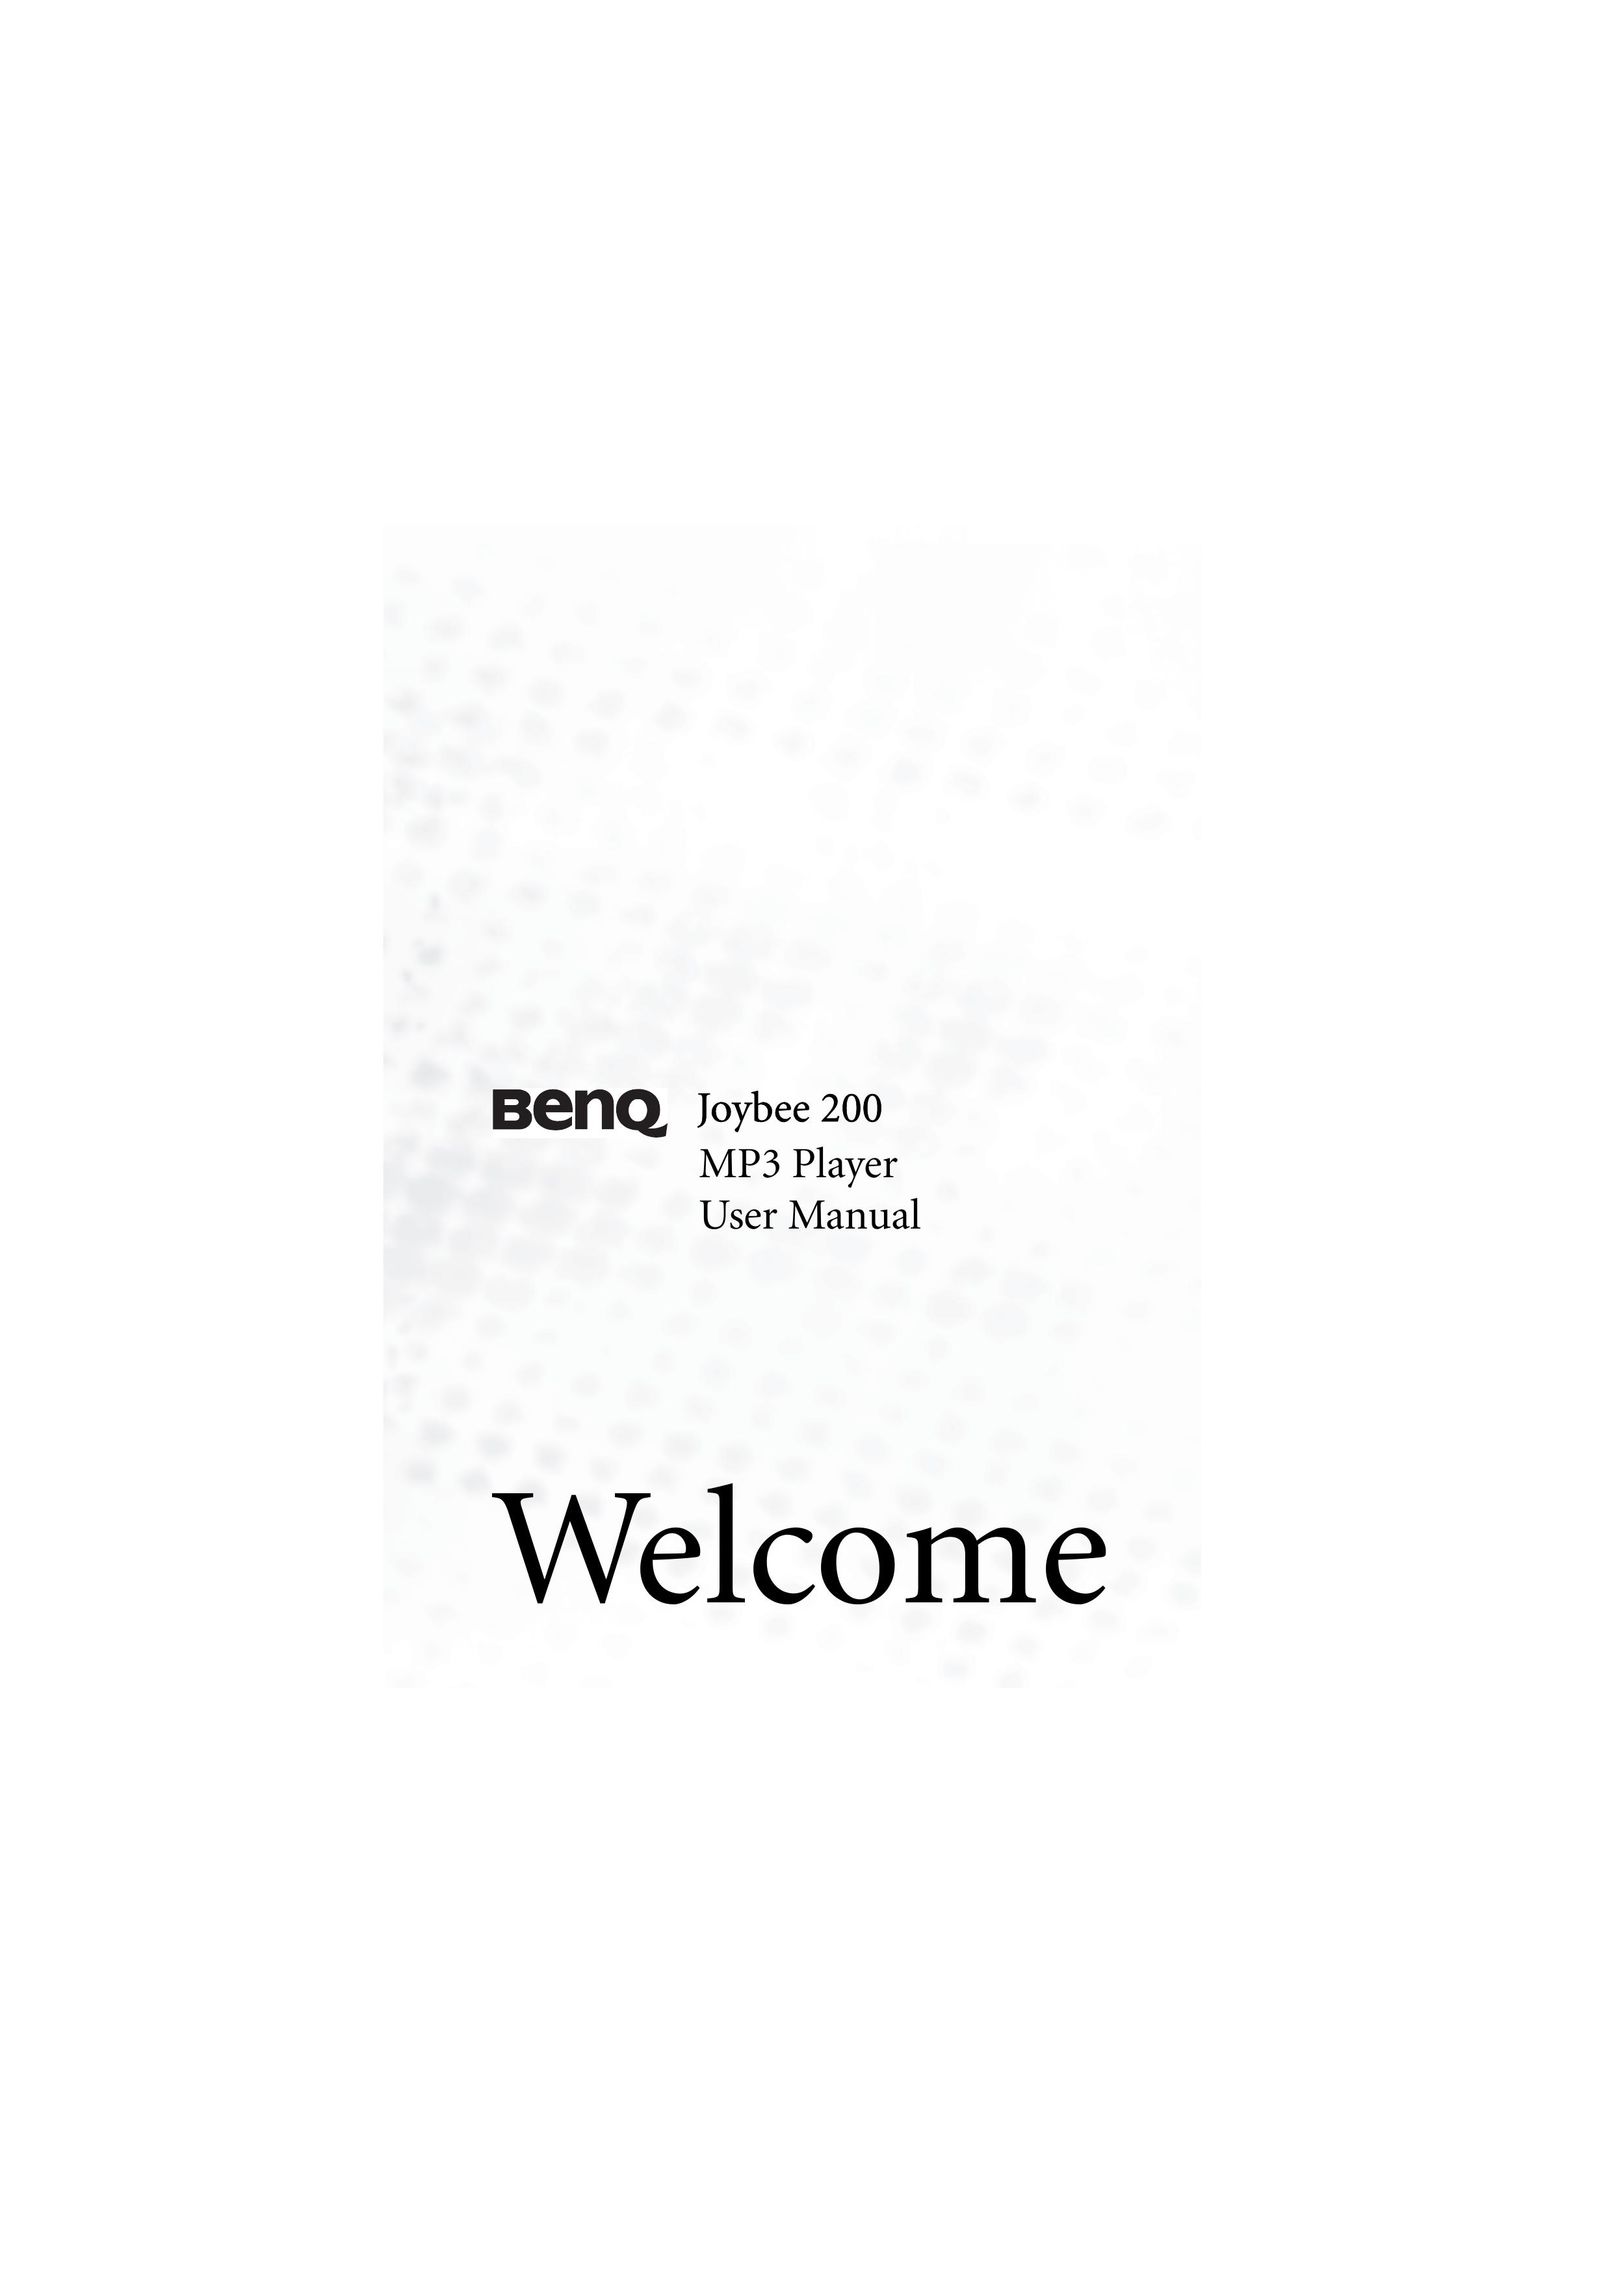 BenQ Joybee 200 MP3 Player User Manual